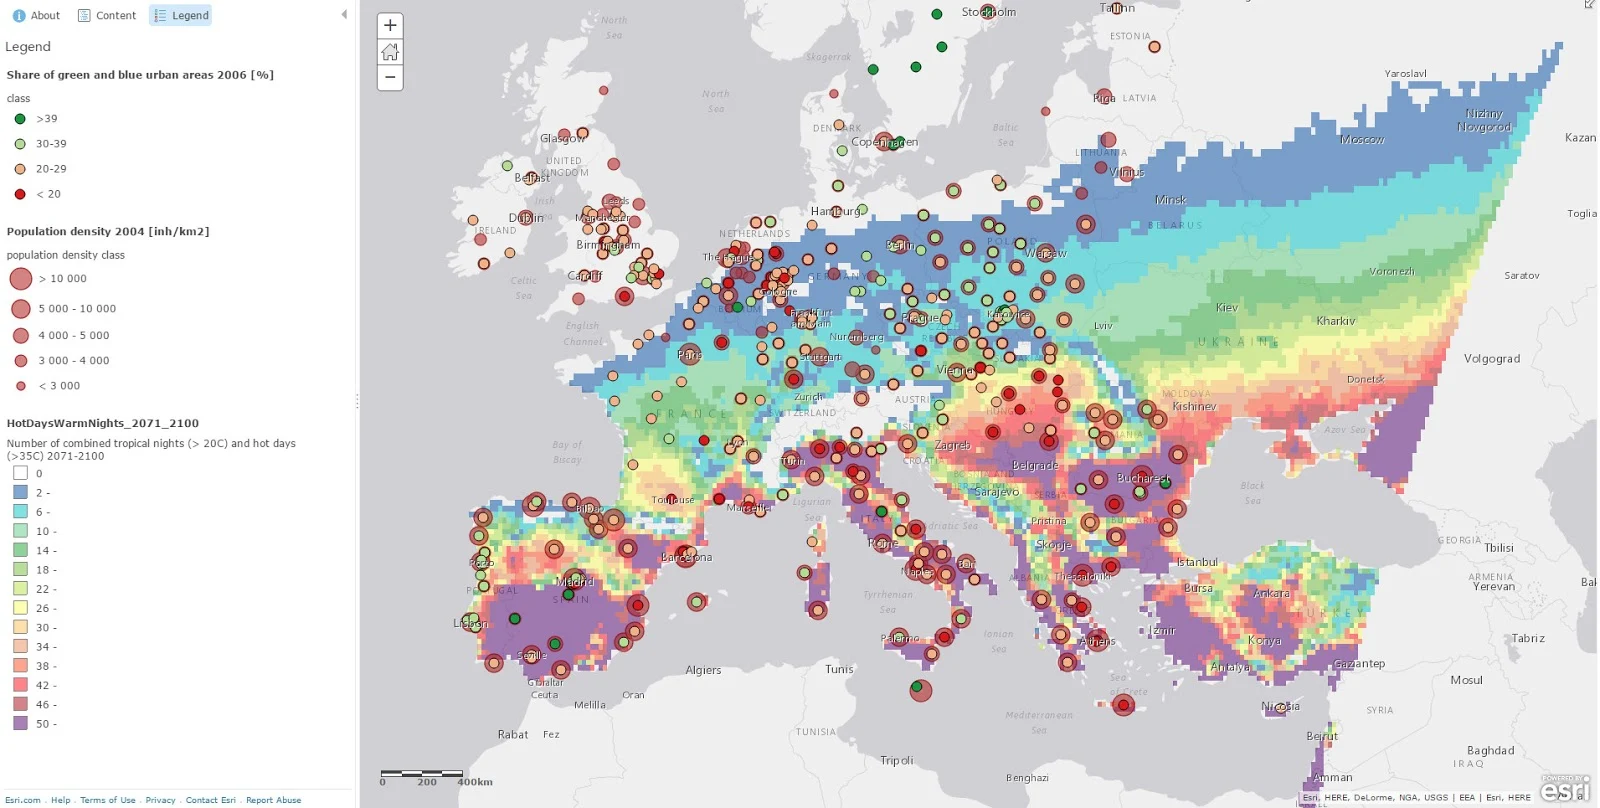 Heat wave risk of European cities